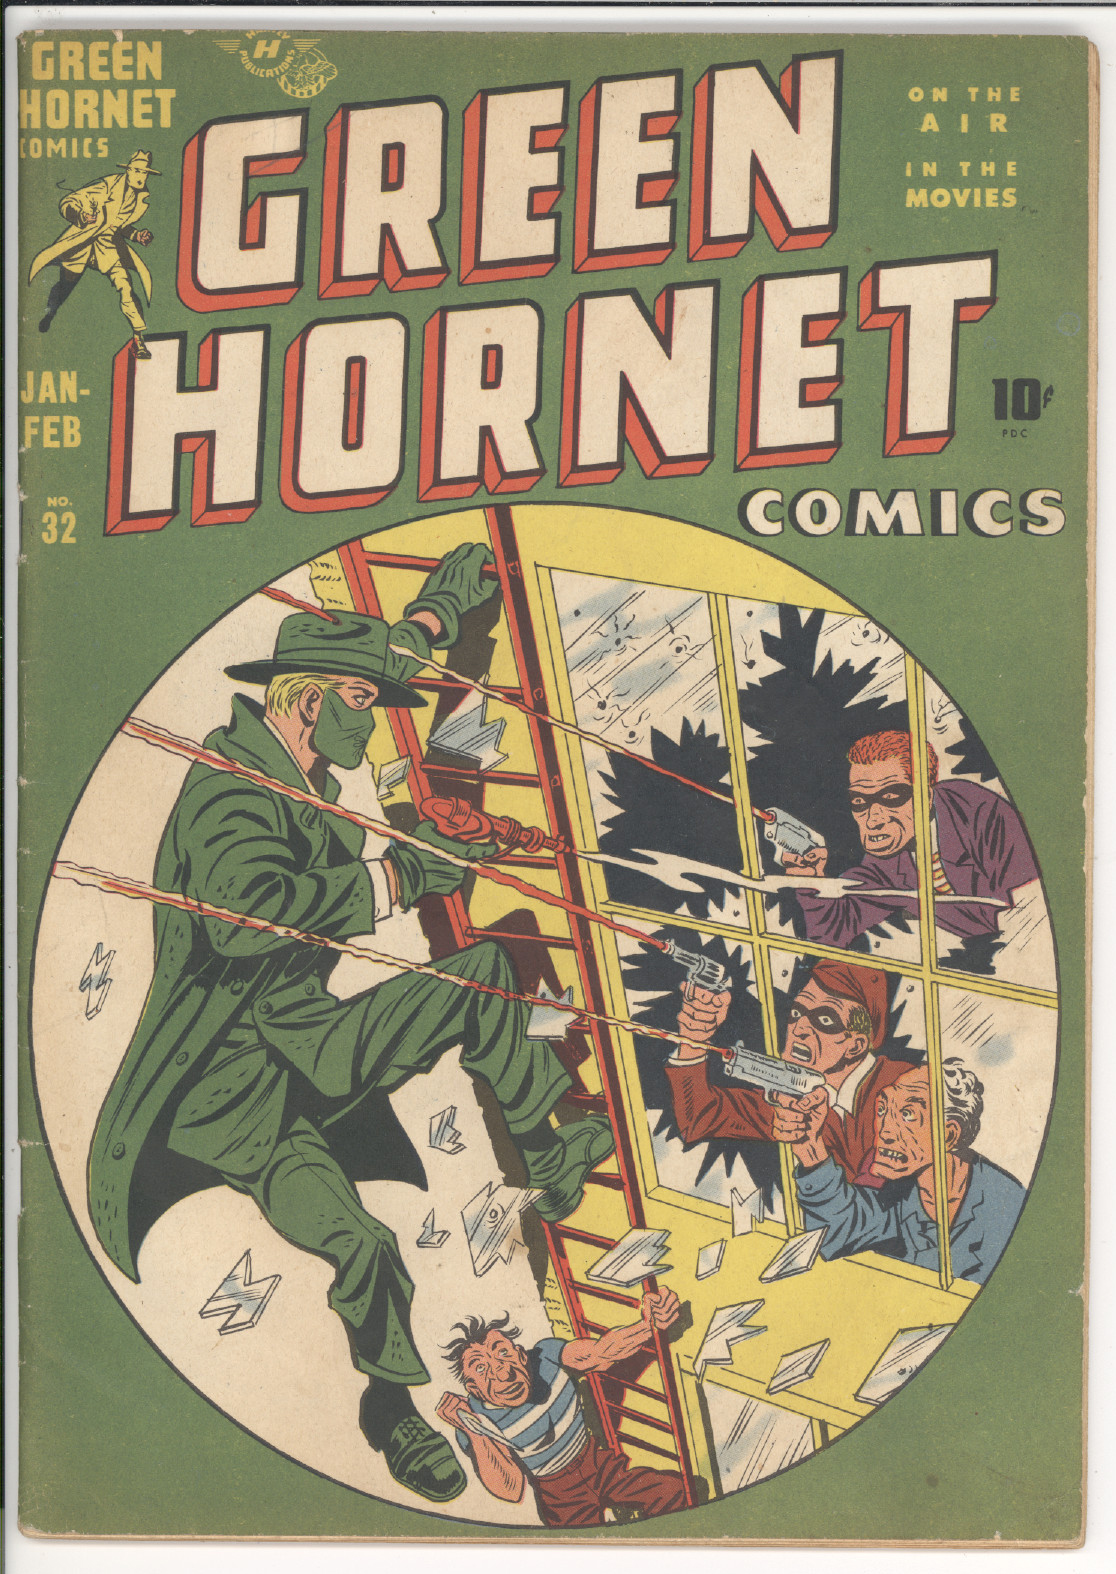 Green Hornet #32 front